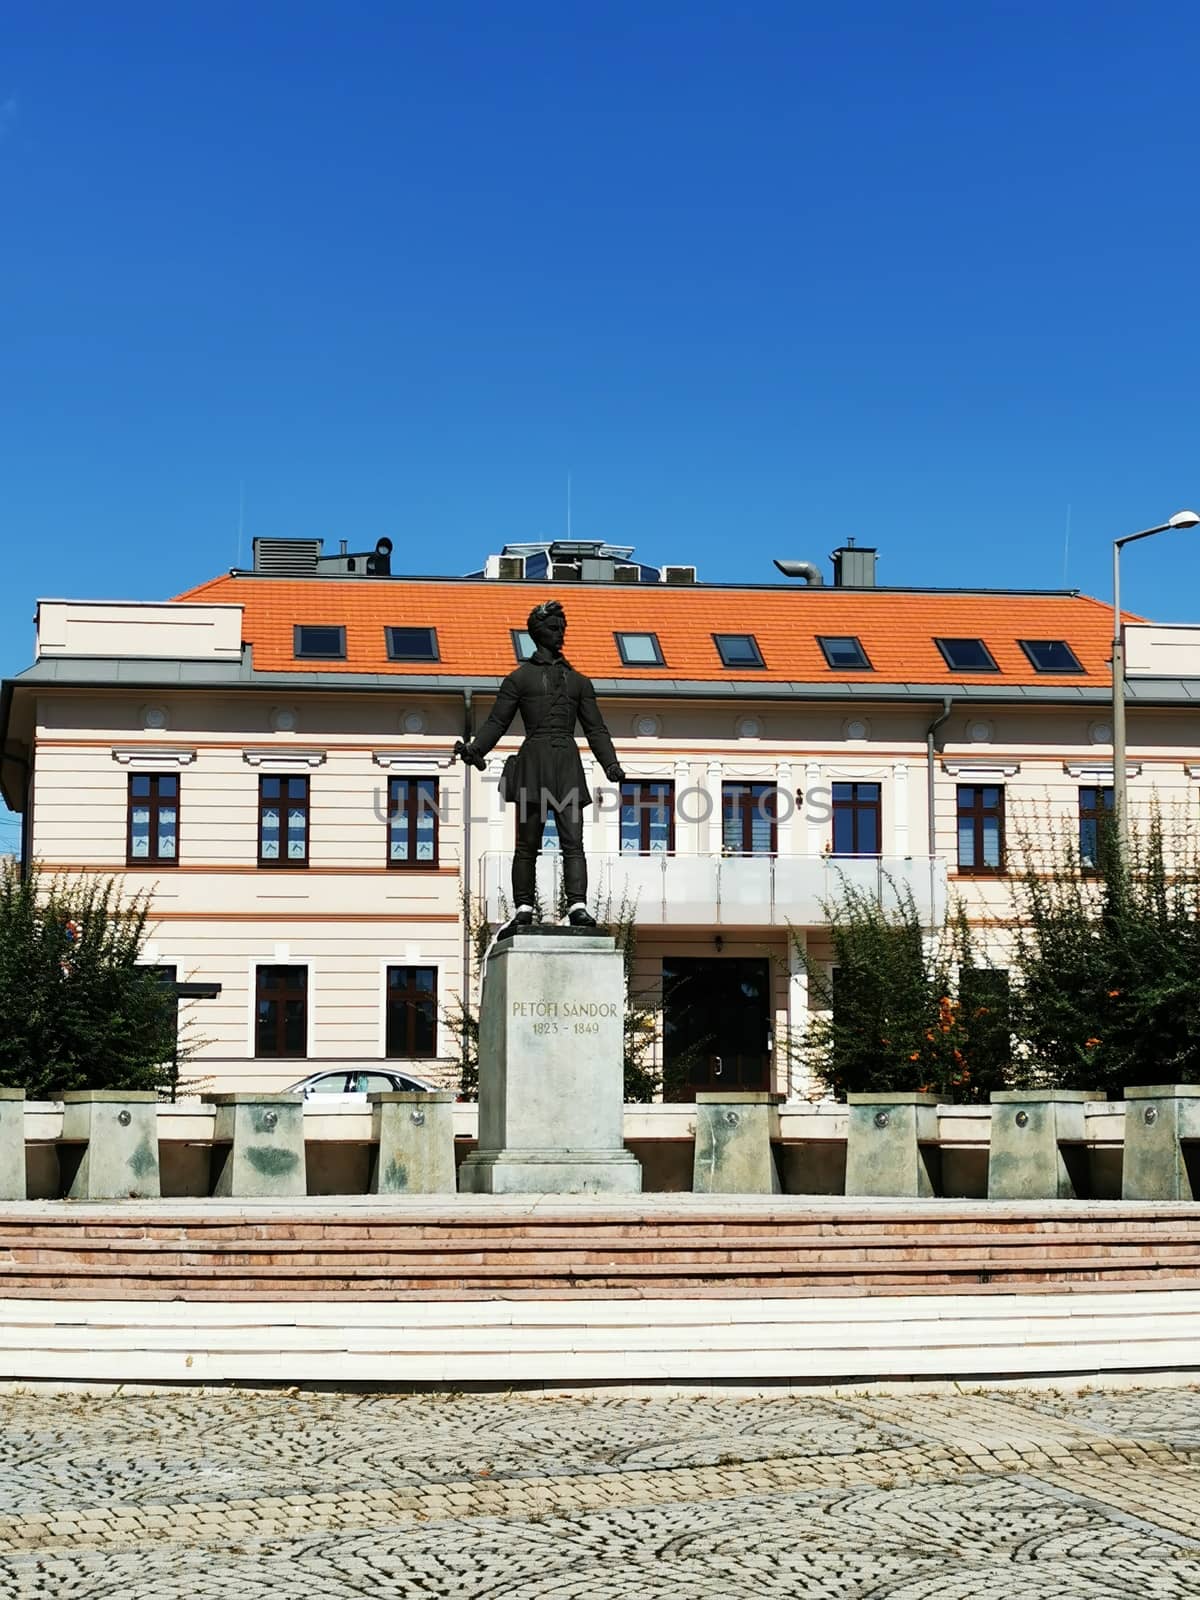 Statue of Sandor Petofi in Miskolc Park High quality photo.